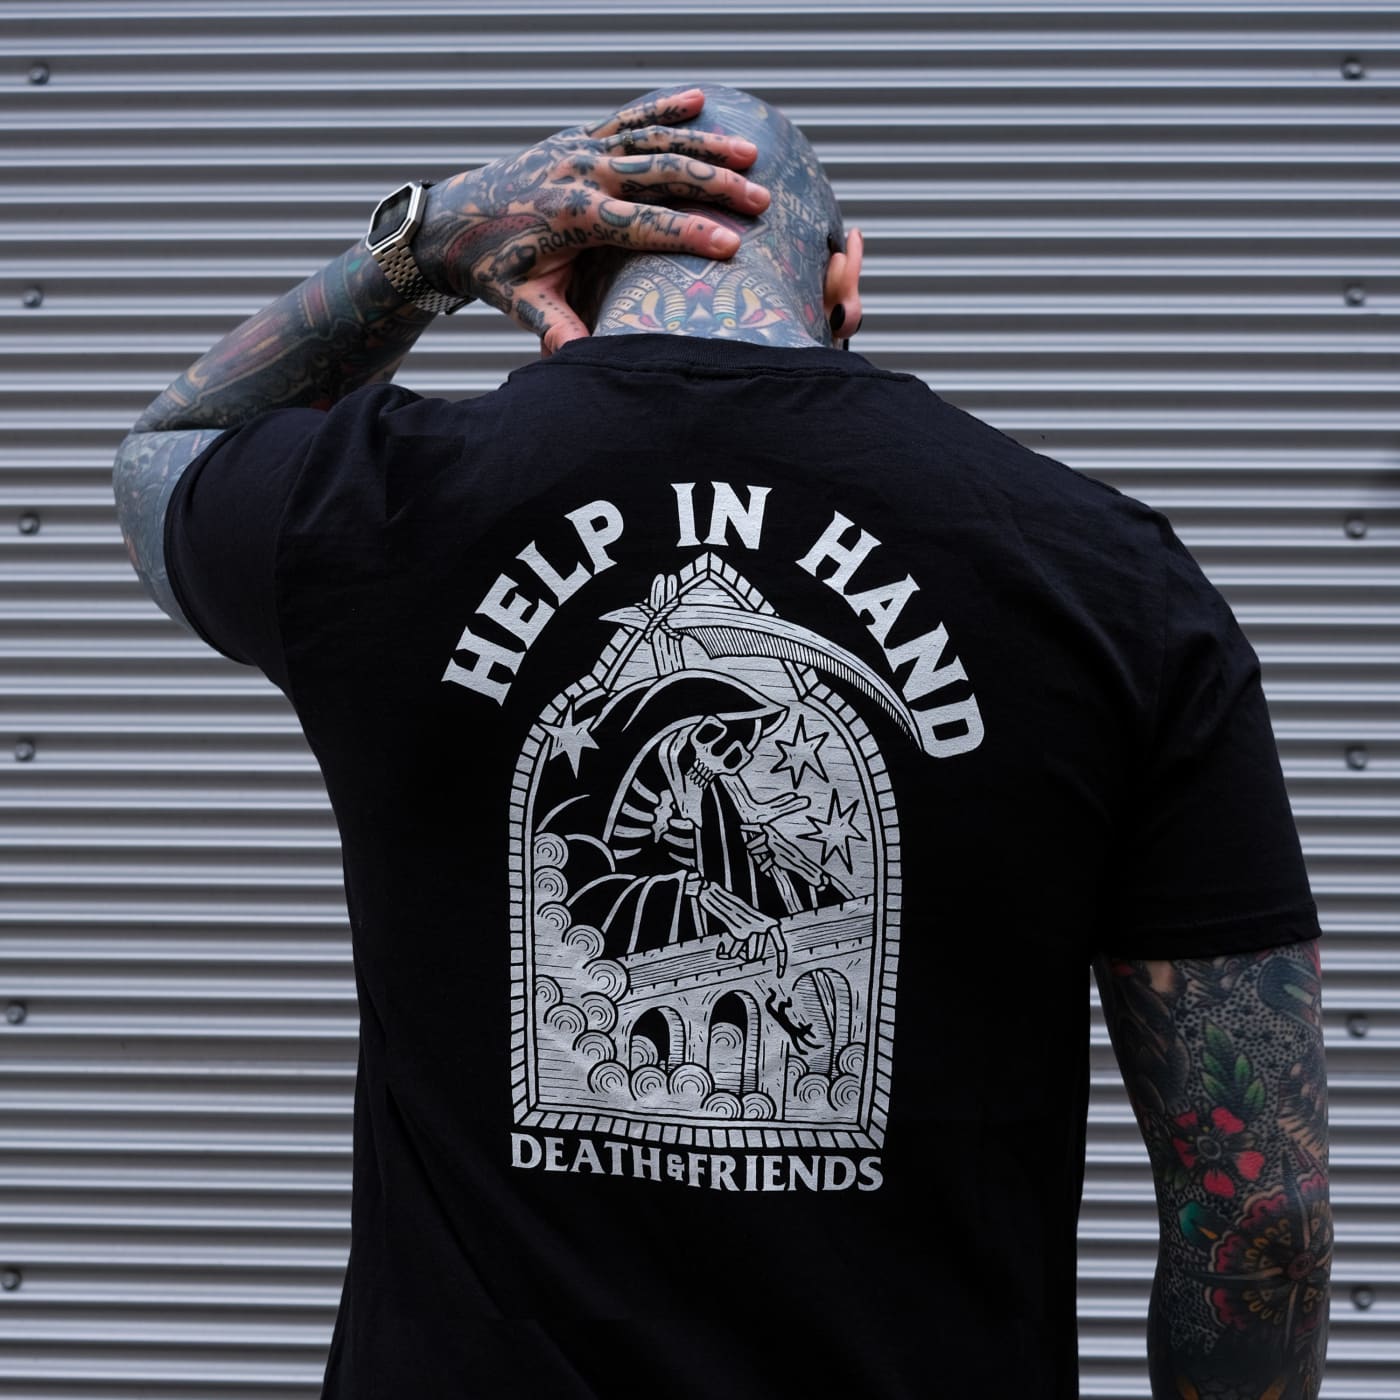 Help in Hand t-shirt - Death Ltd - Streetwear Brand UK Clothing